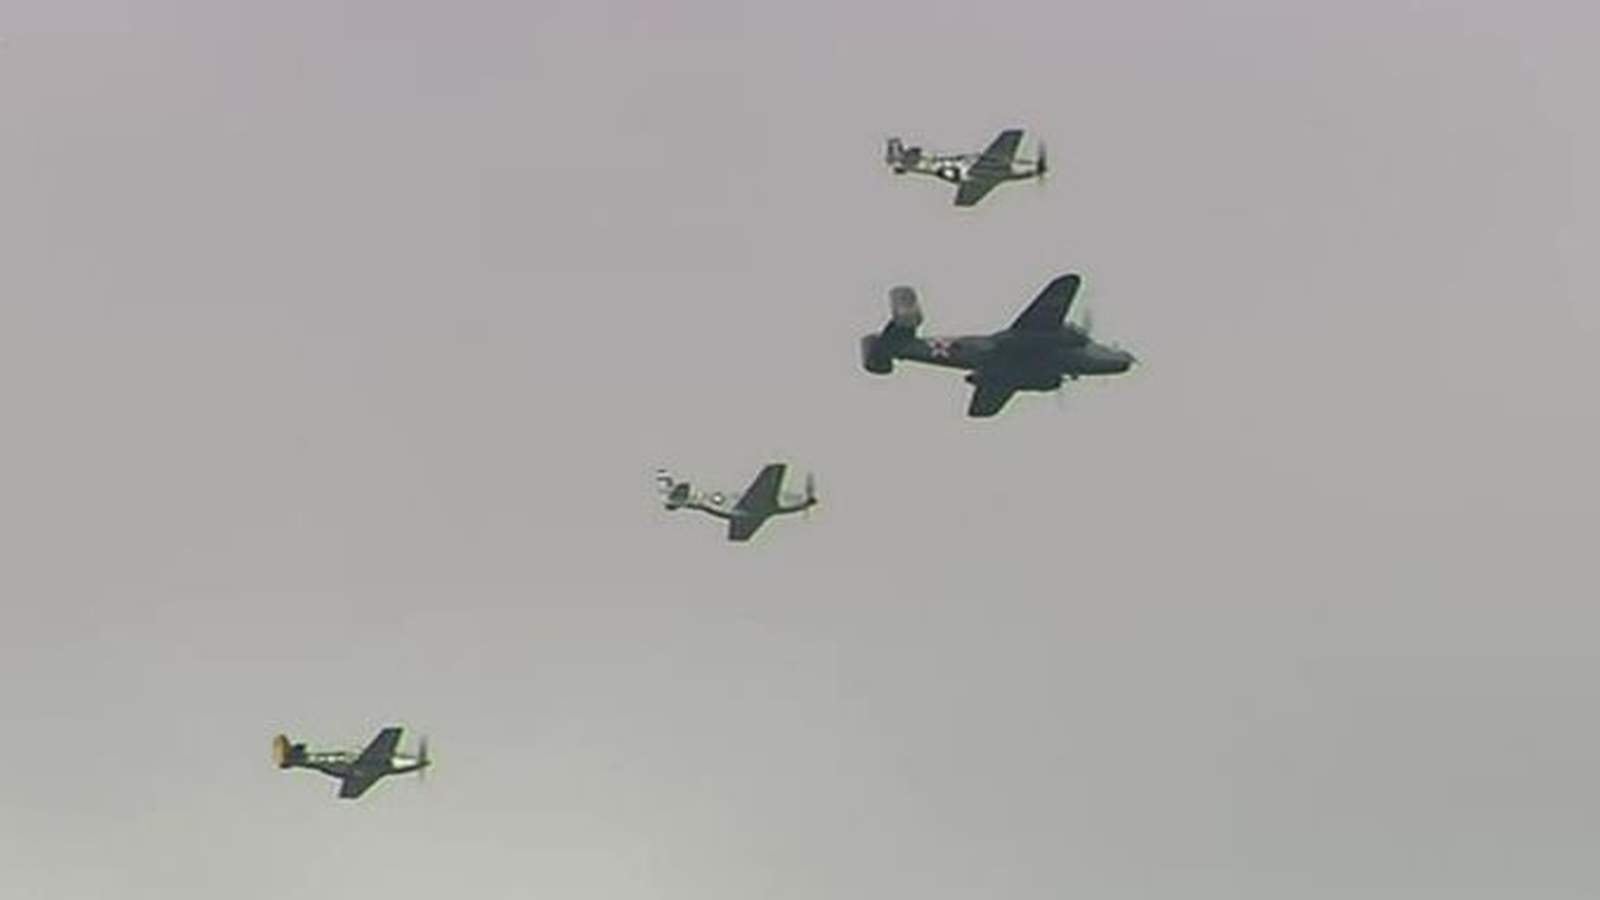 WATCH: World War II warbird planes fly over San Antonio for Memorial Day